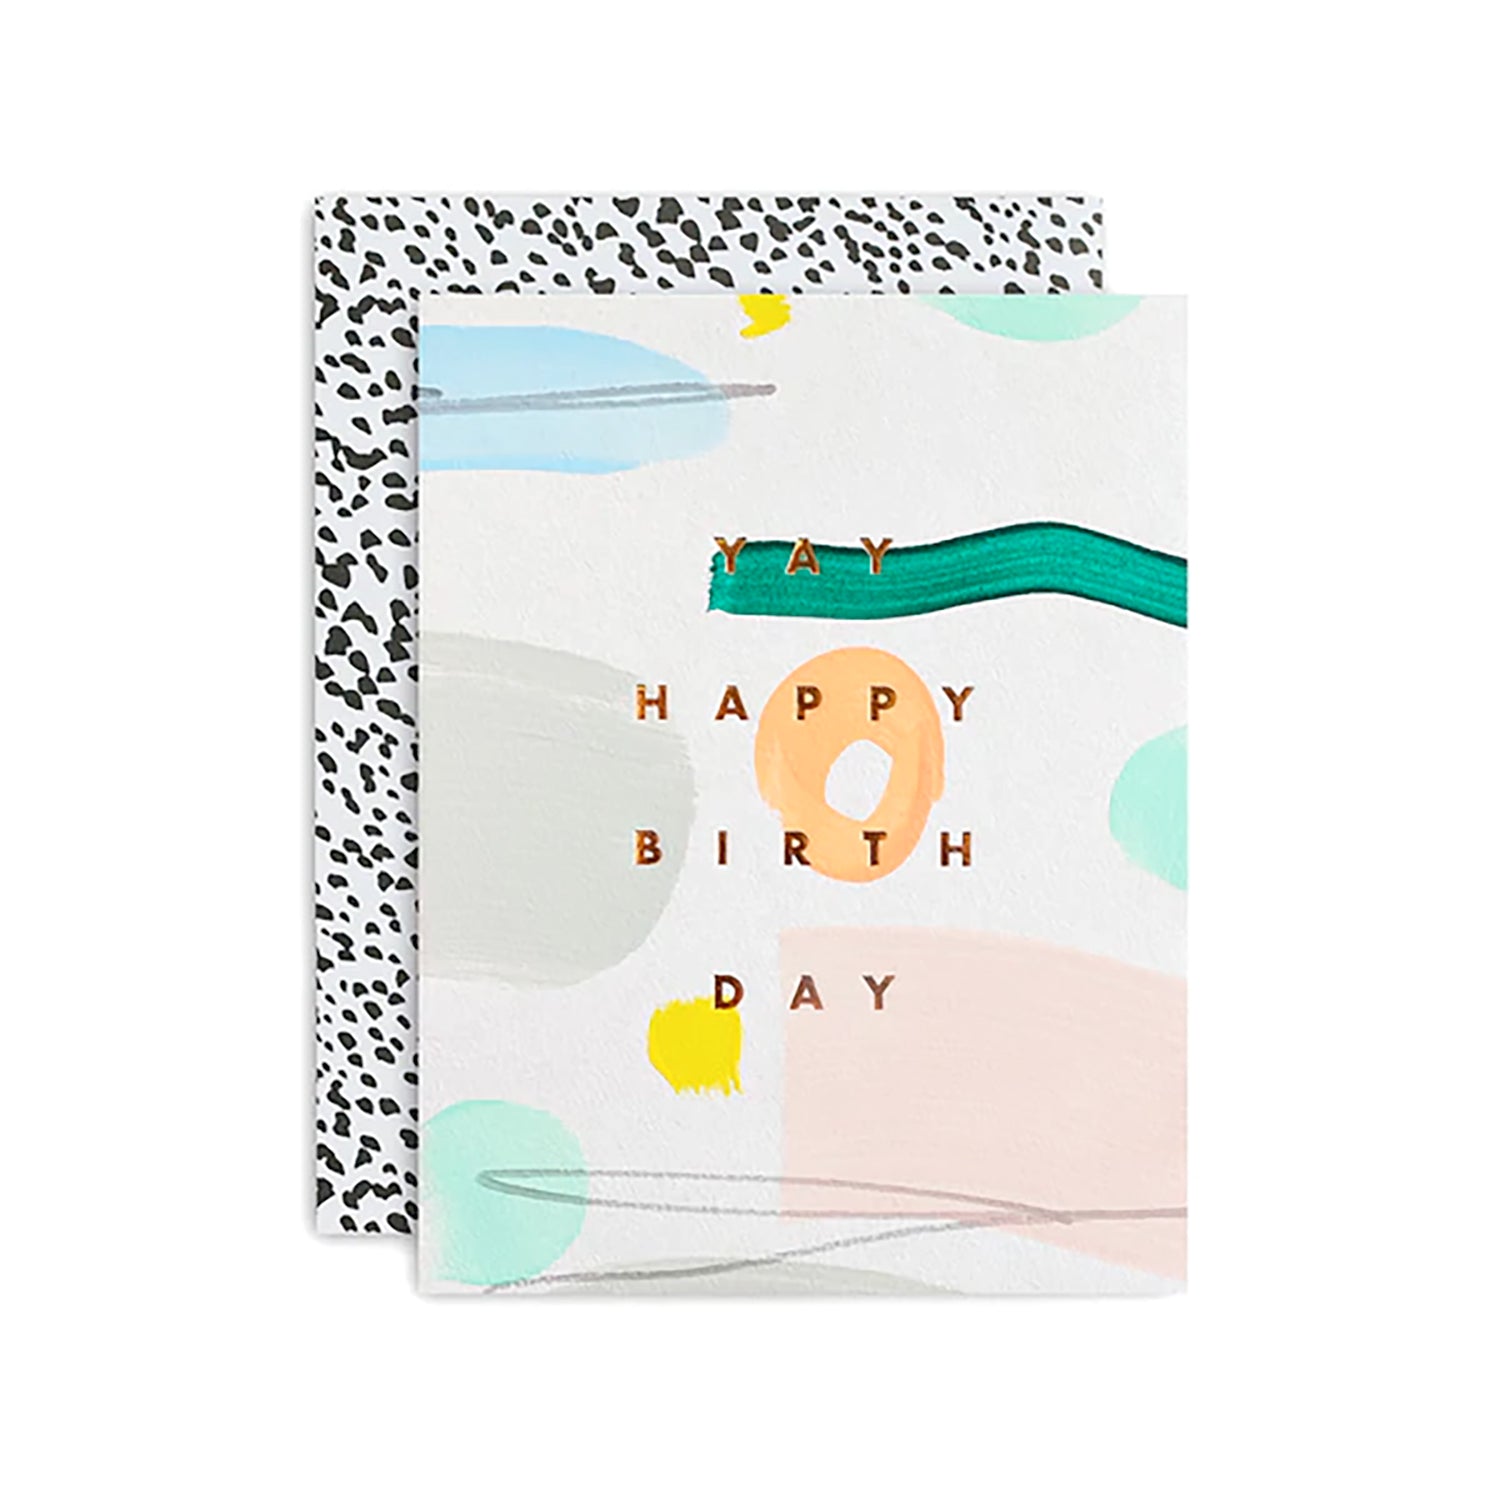 Yay Happy Birthday Card